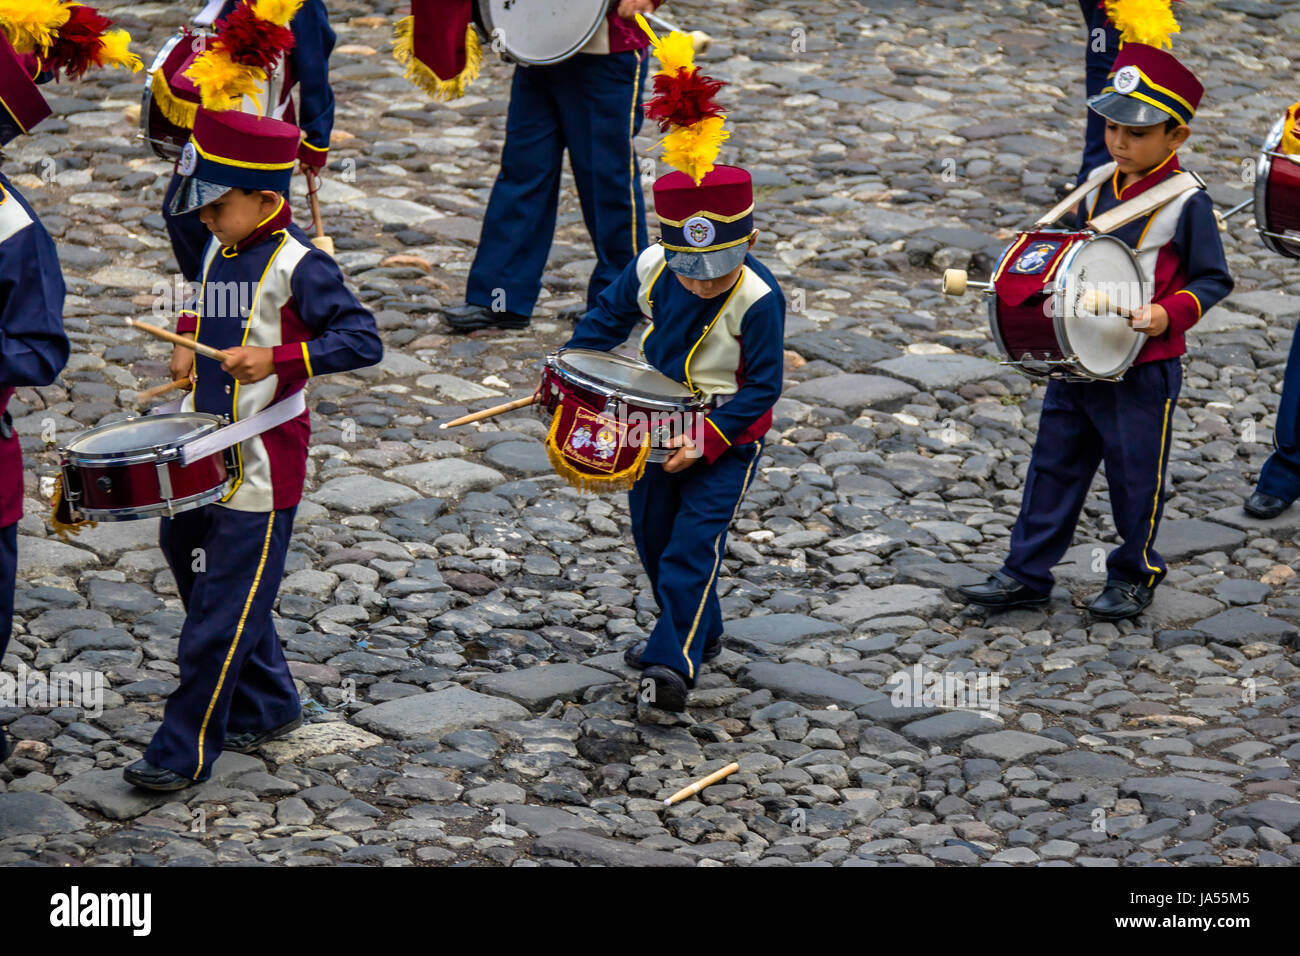 ANTIGUA, GUATEMALA - Sep 4, 2016: Gruppe von kleinen Kinder Marching Band in Uniformen - Antigua, Guatemala Stockfoto